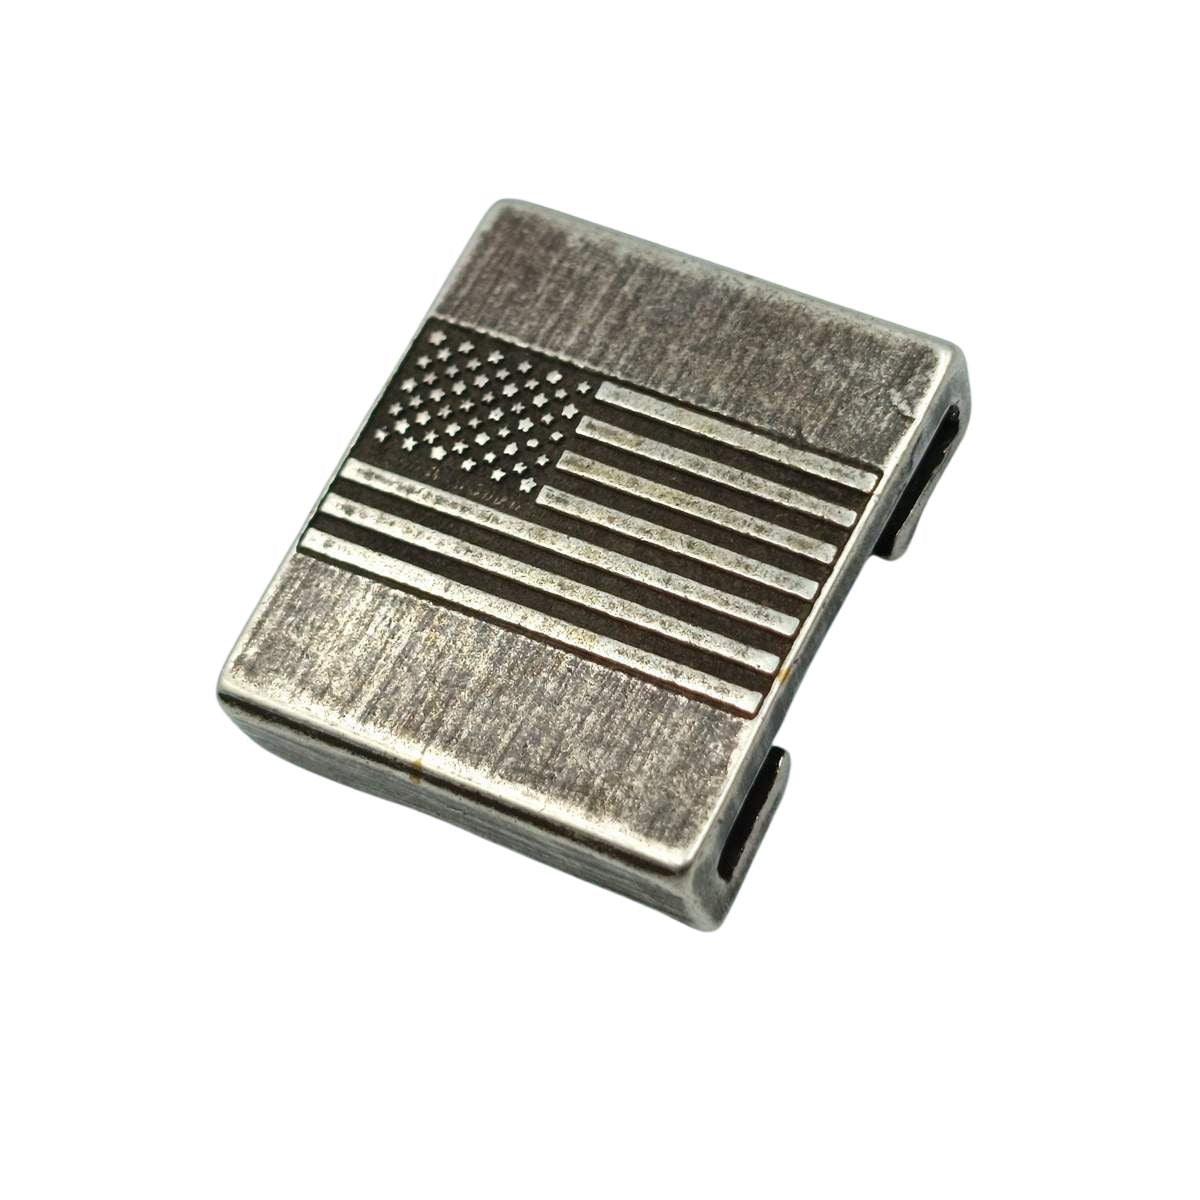 American flag Molle clip